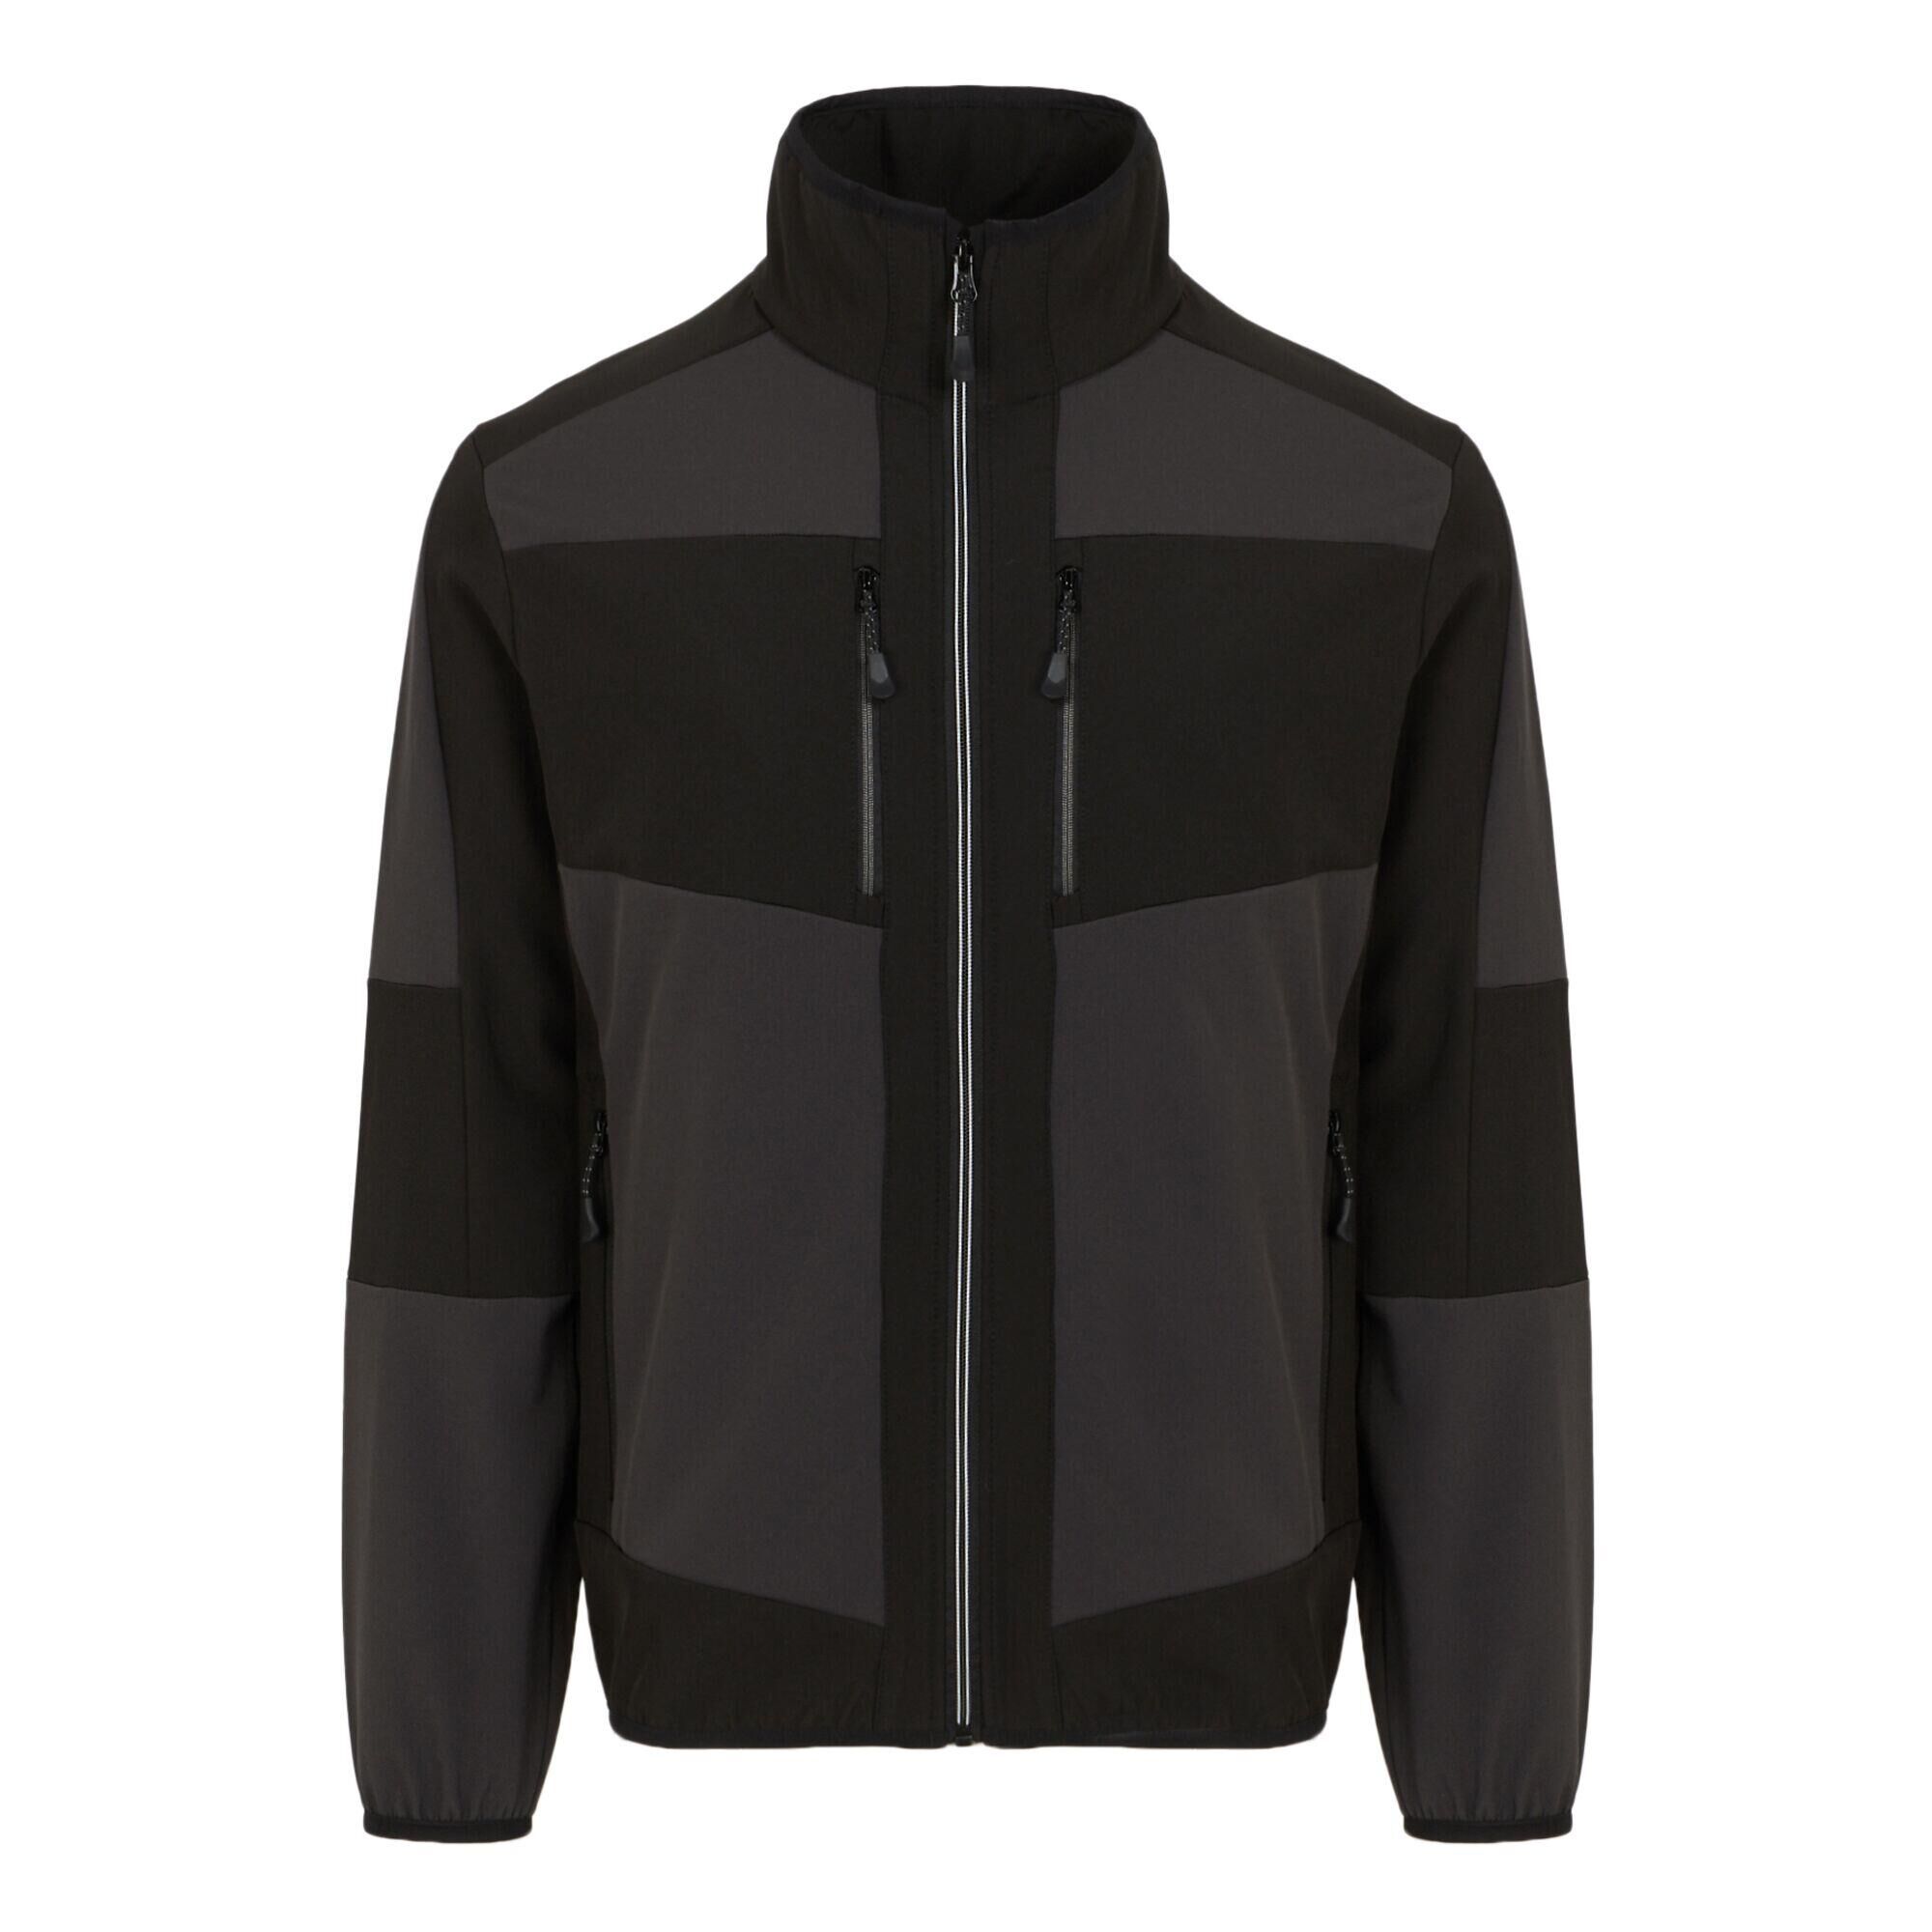 REGATTA Unisex Adult EVolve 2 Layer Soft Shell Jacket (Ash/Black)